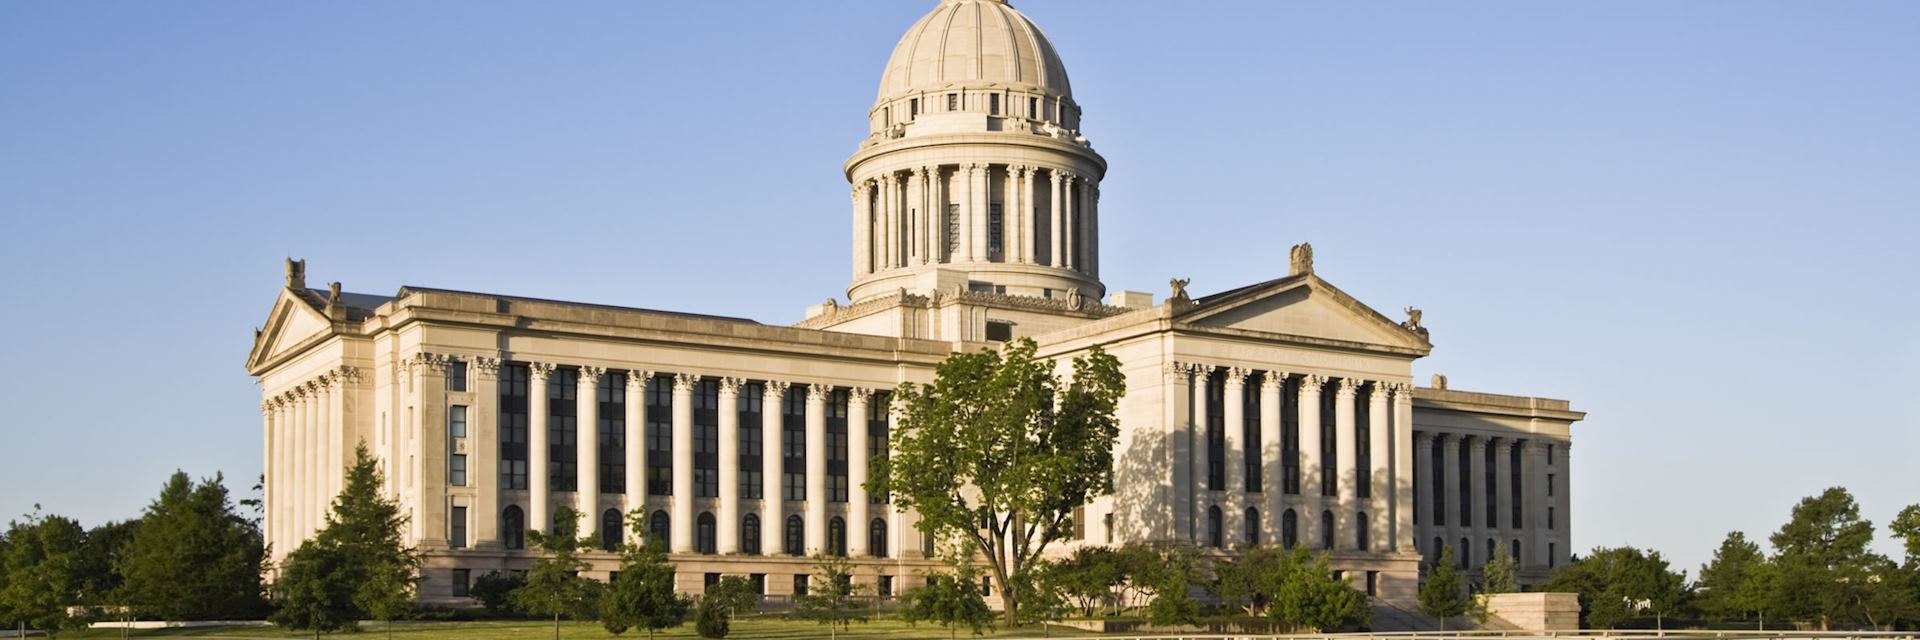 Oklahoma State Capitol, Oklahoma City